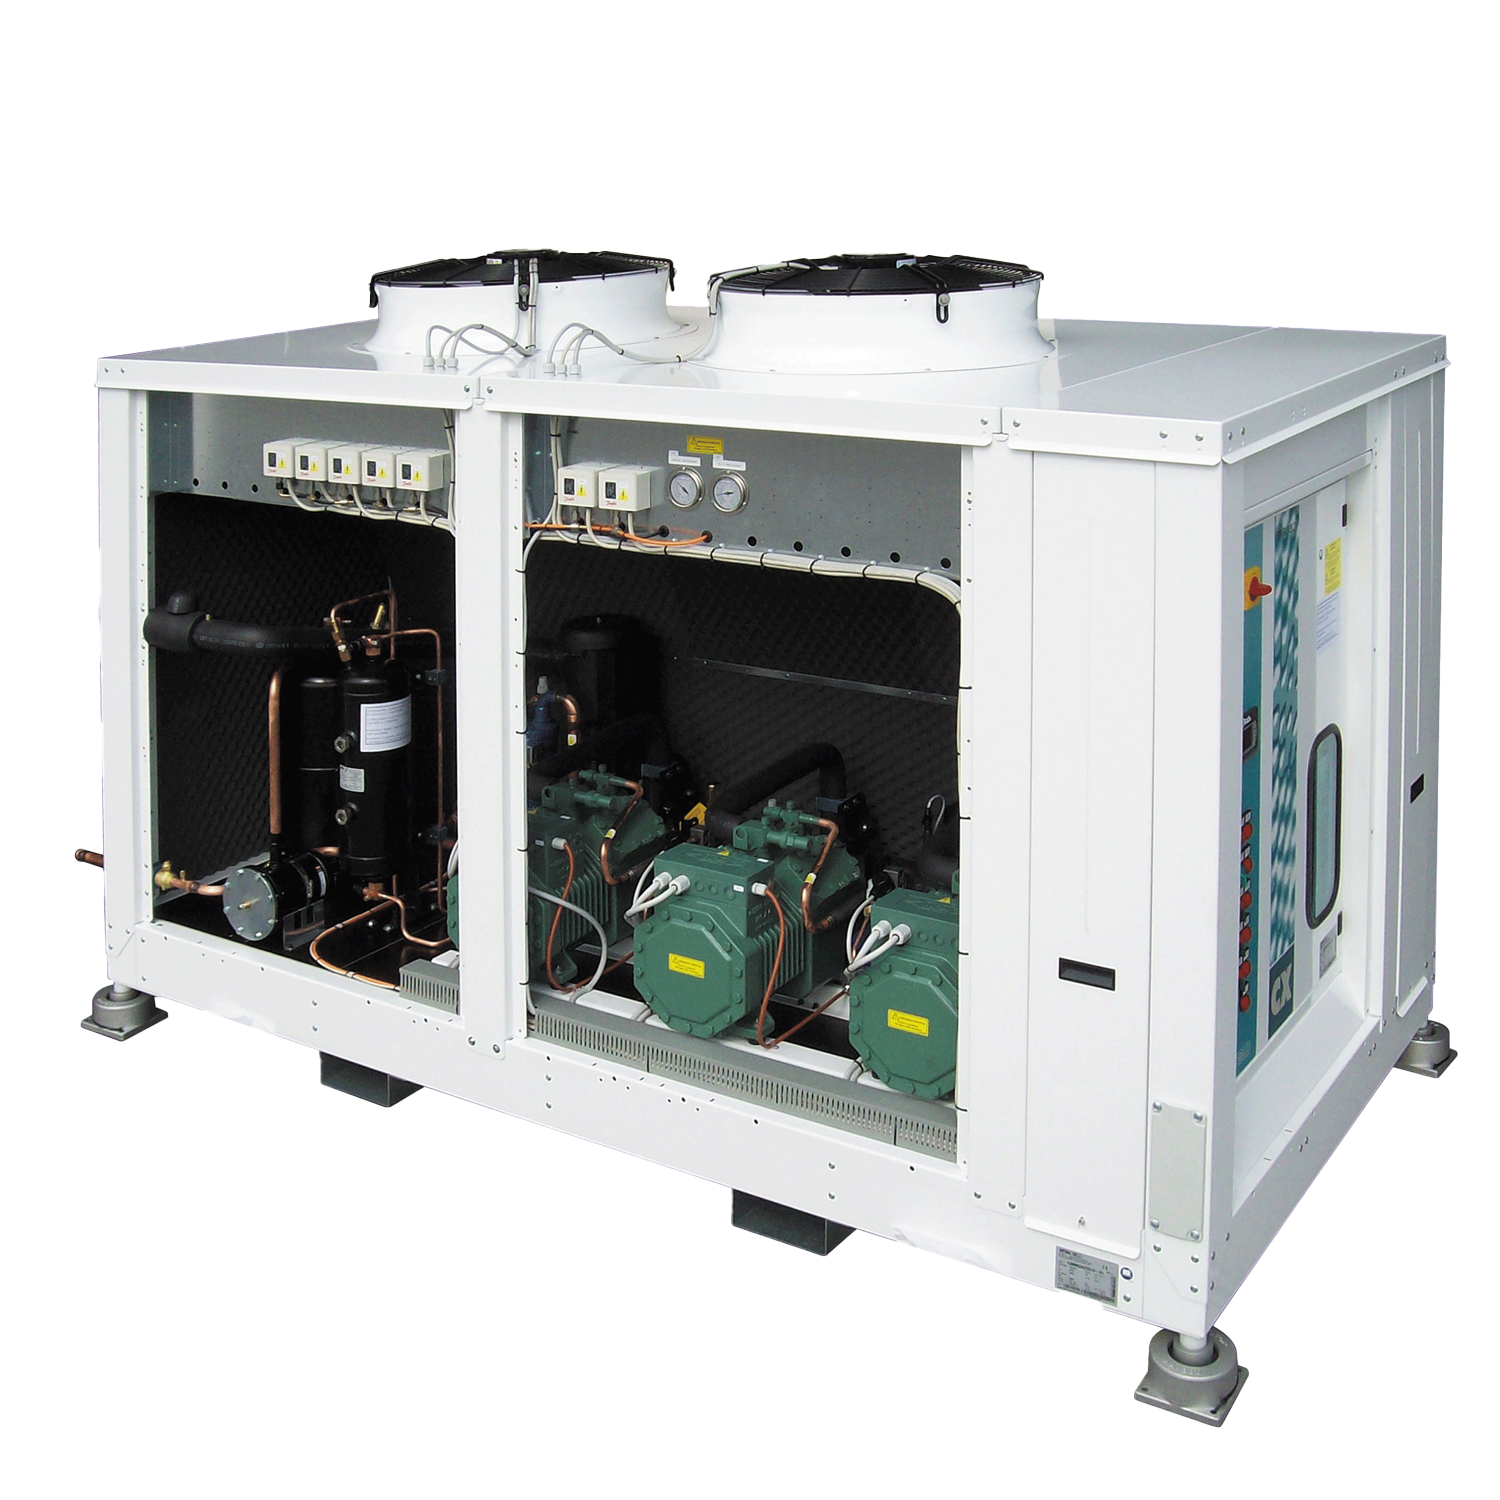 CX-B-EC-12: Multi Compressor Packs with 3 x Bitzer reciprocating compressors, EC fan, sound insulation and built-in condenser – R134a/R513A/R449A